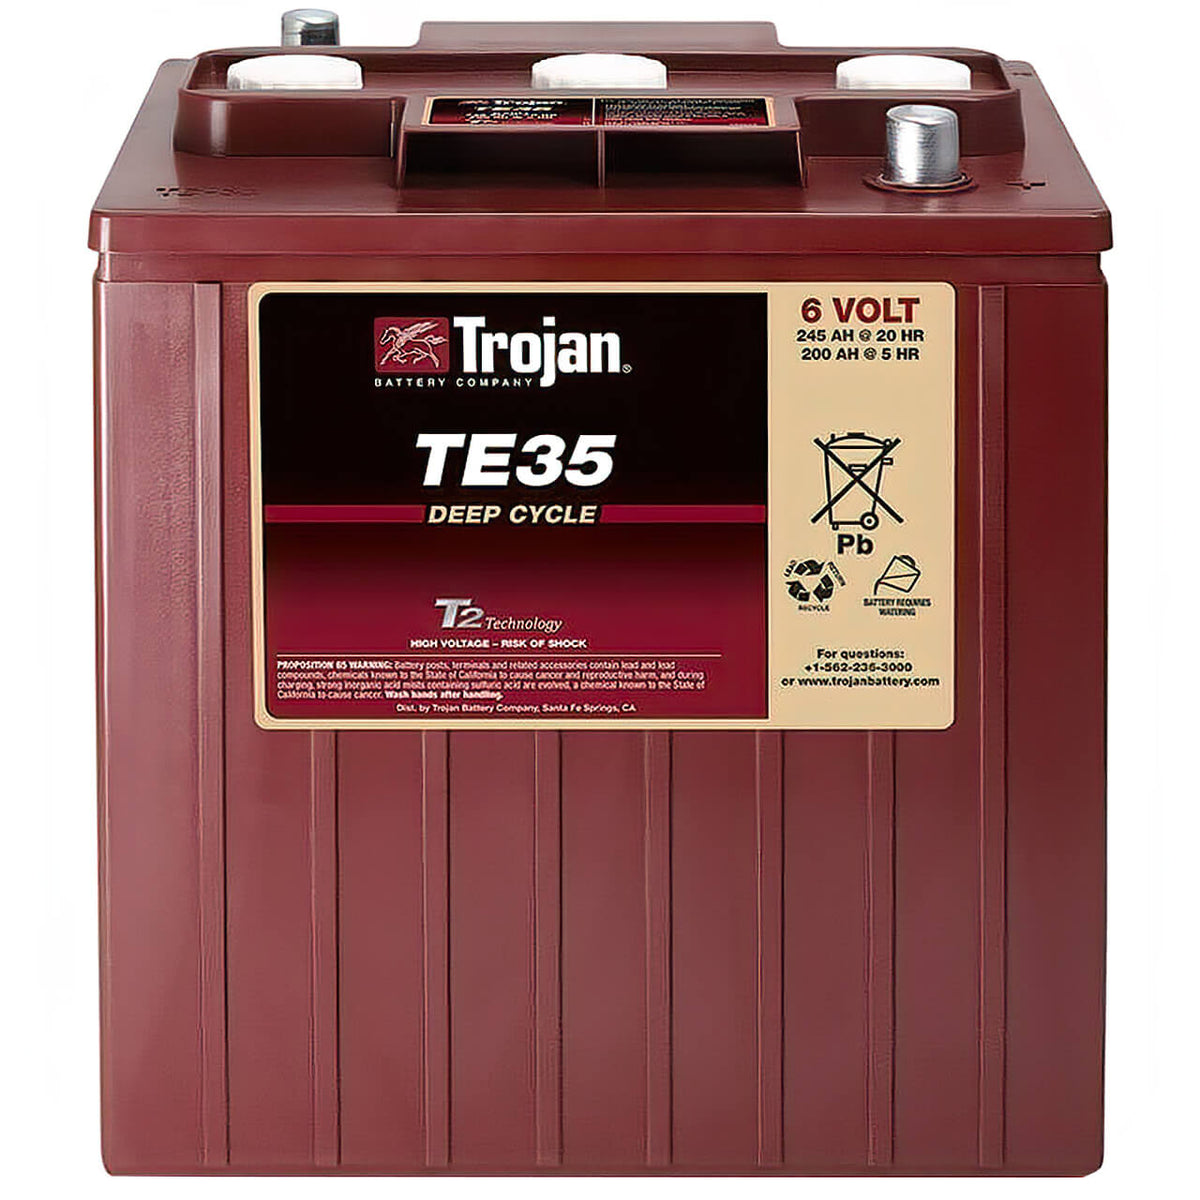 Traktionsbatterie Trojan TE35 6V 245Ah Front